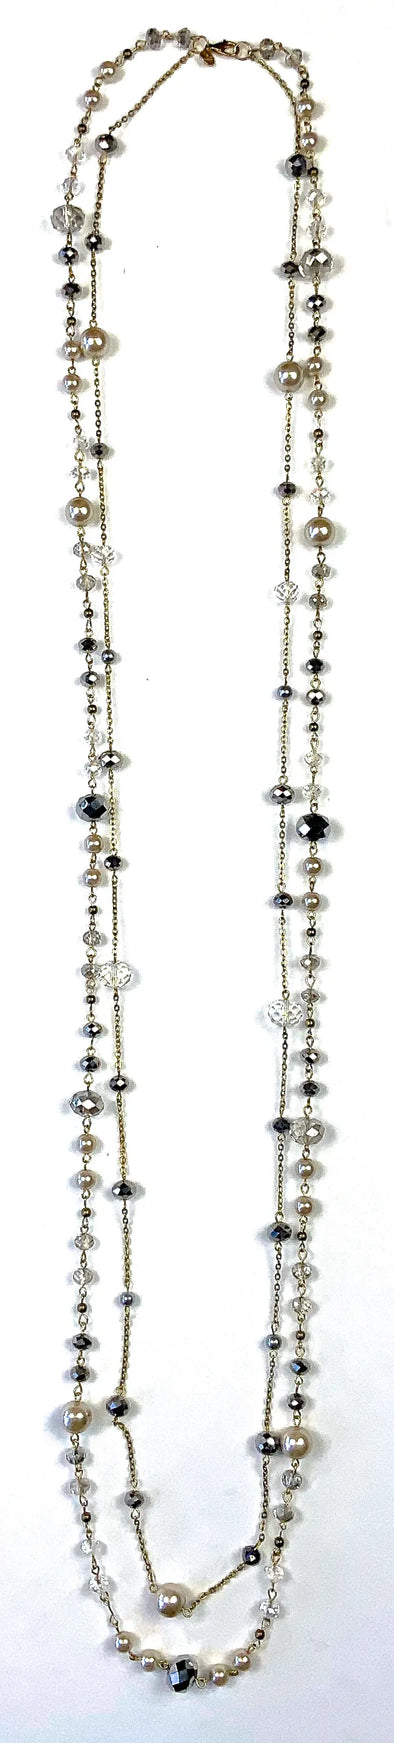 Double strand opera length necklace